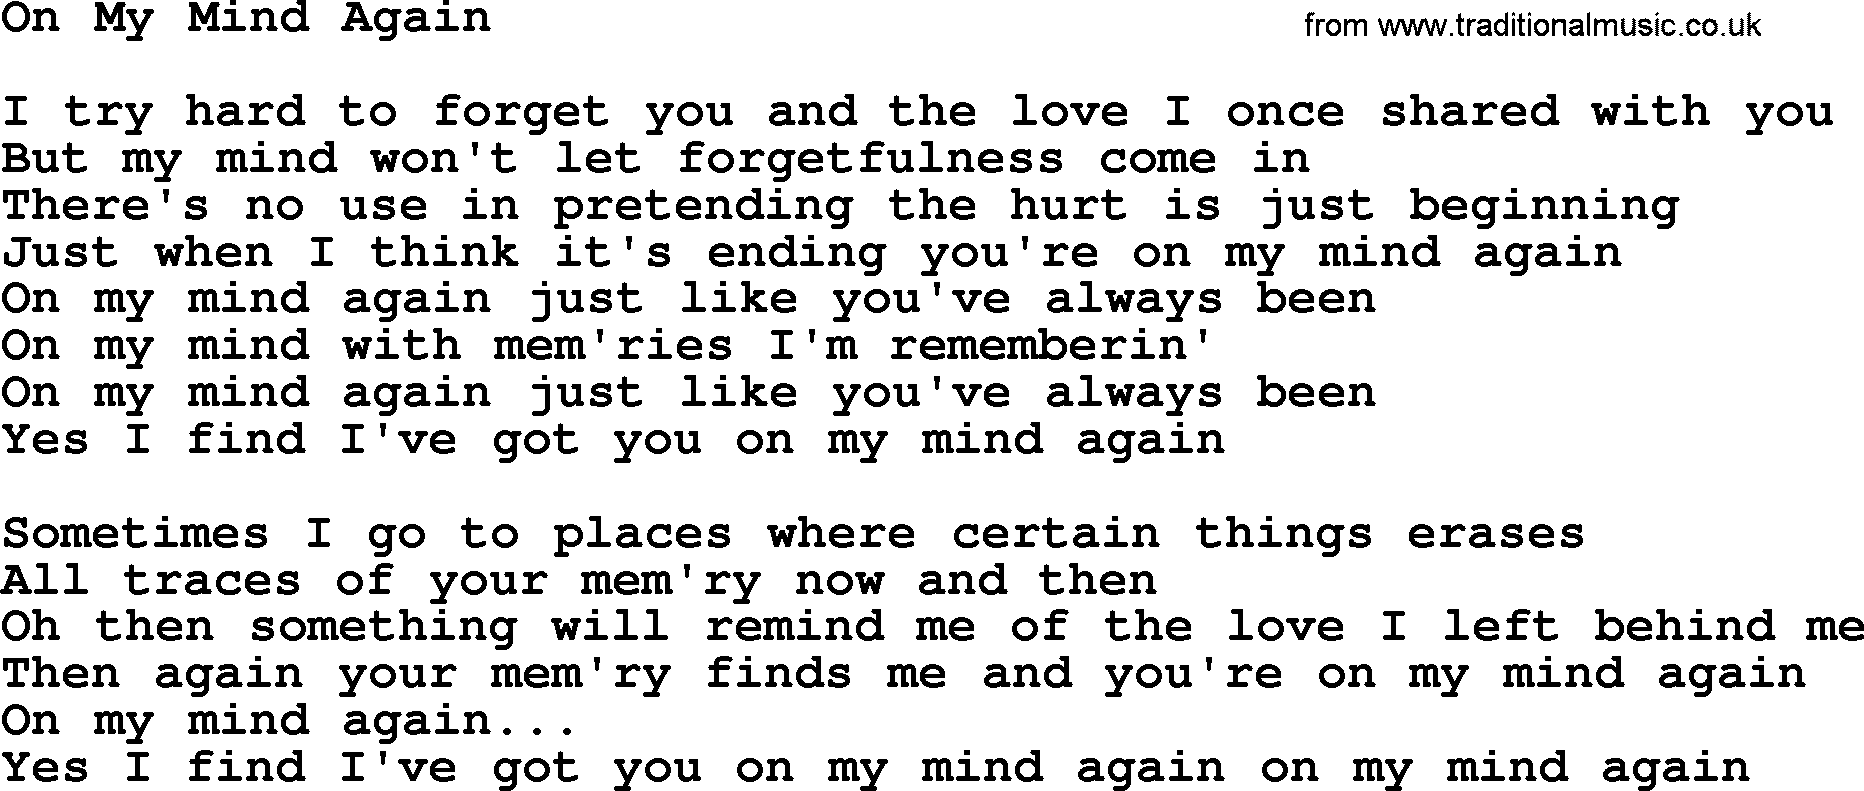 Dolly Parton song On My Mind Again.txt lyrics